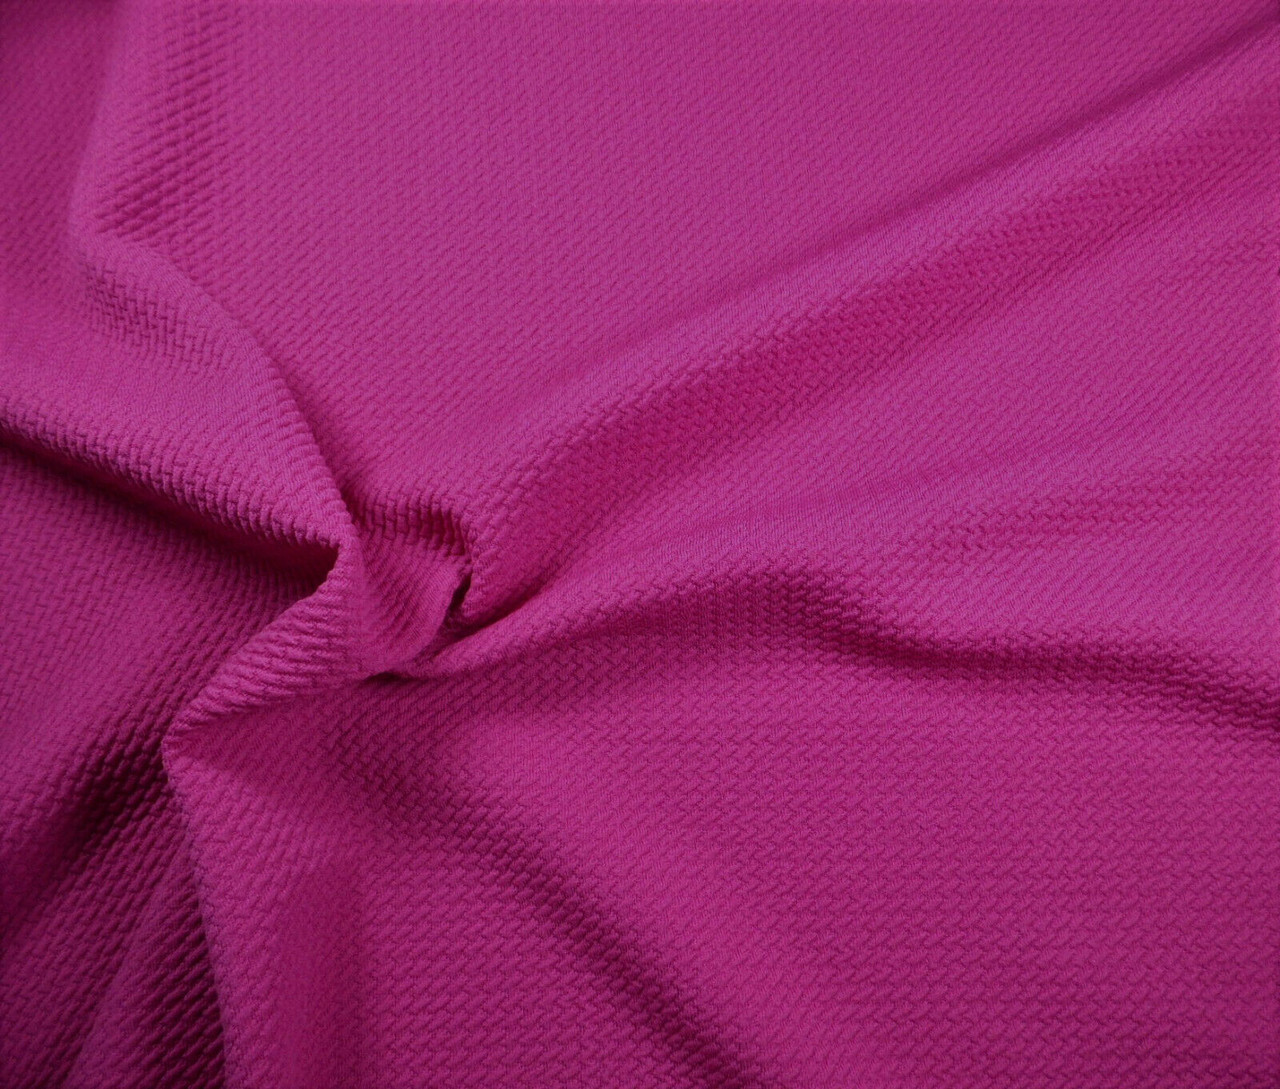 Bullet Textured Liverpool Fabric 4 way Stretch Magenta Q11